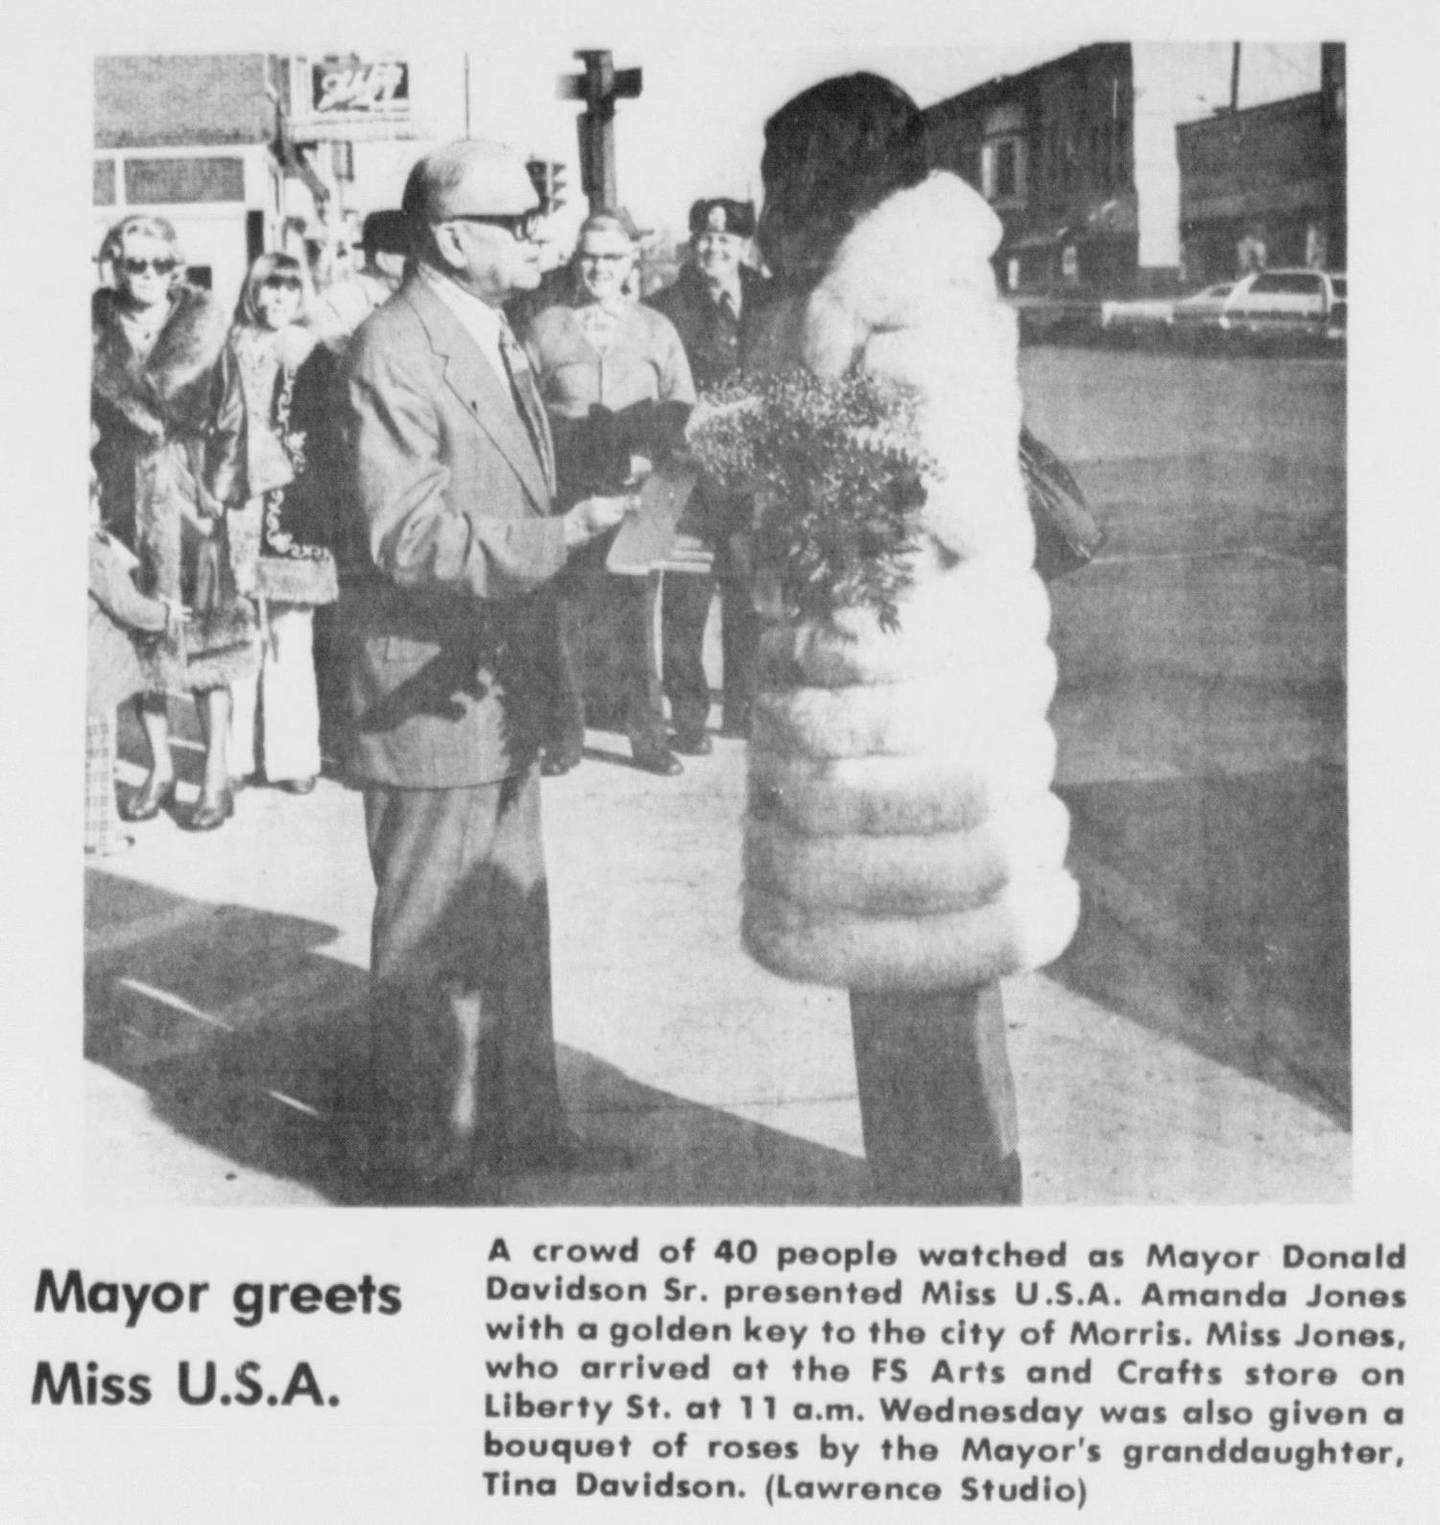 Miss U.S.A., Amanda Jones, greets former Morris Mayor Donald Davidson outside 322 Liberty St.